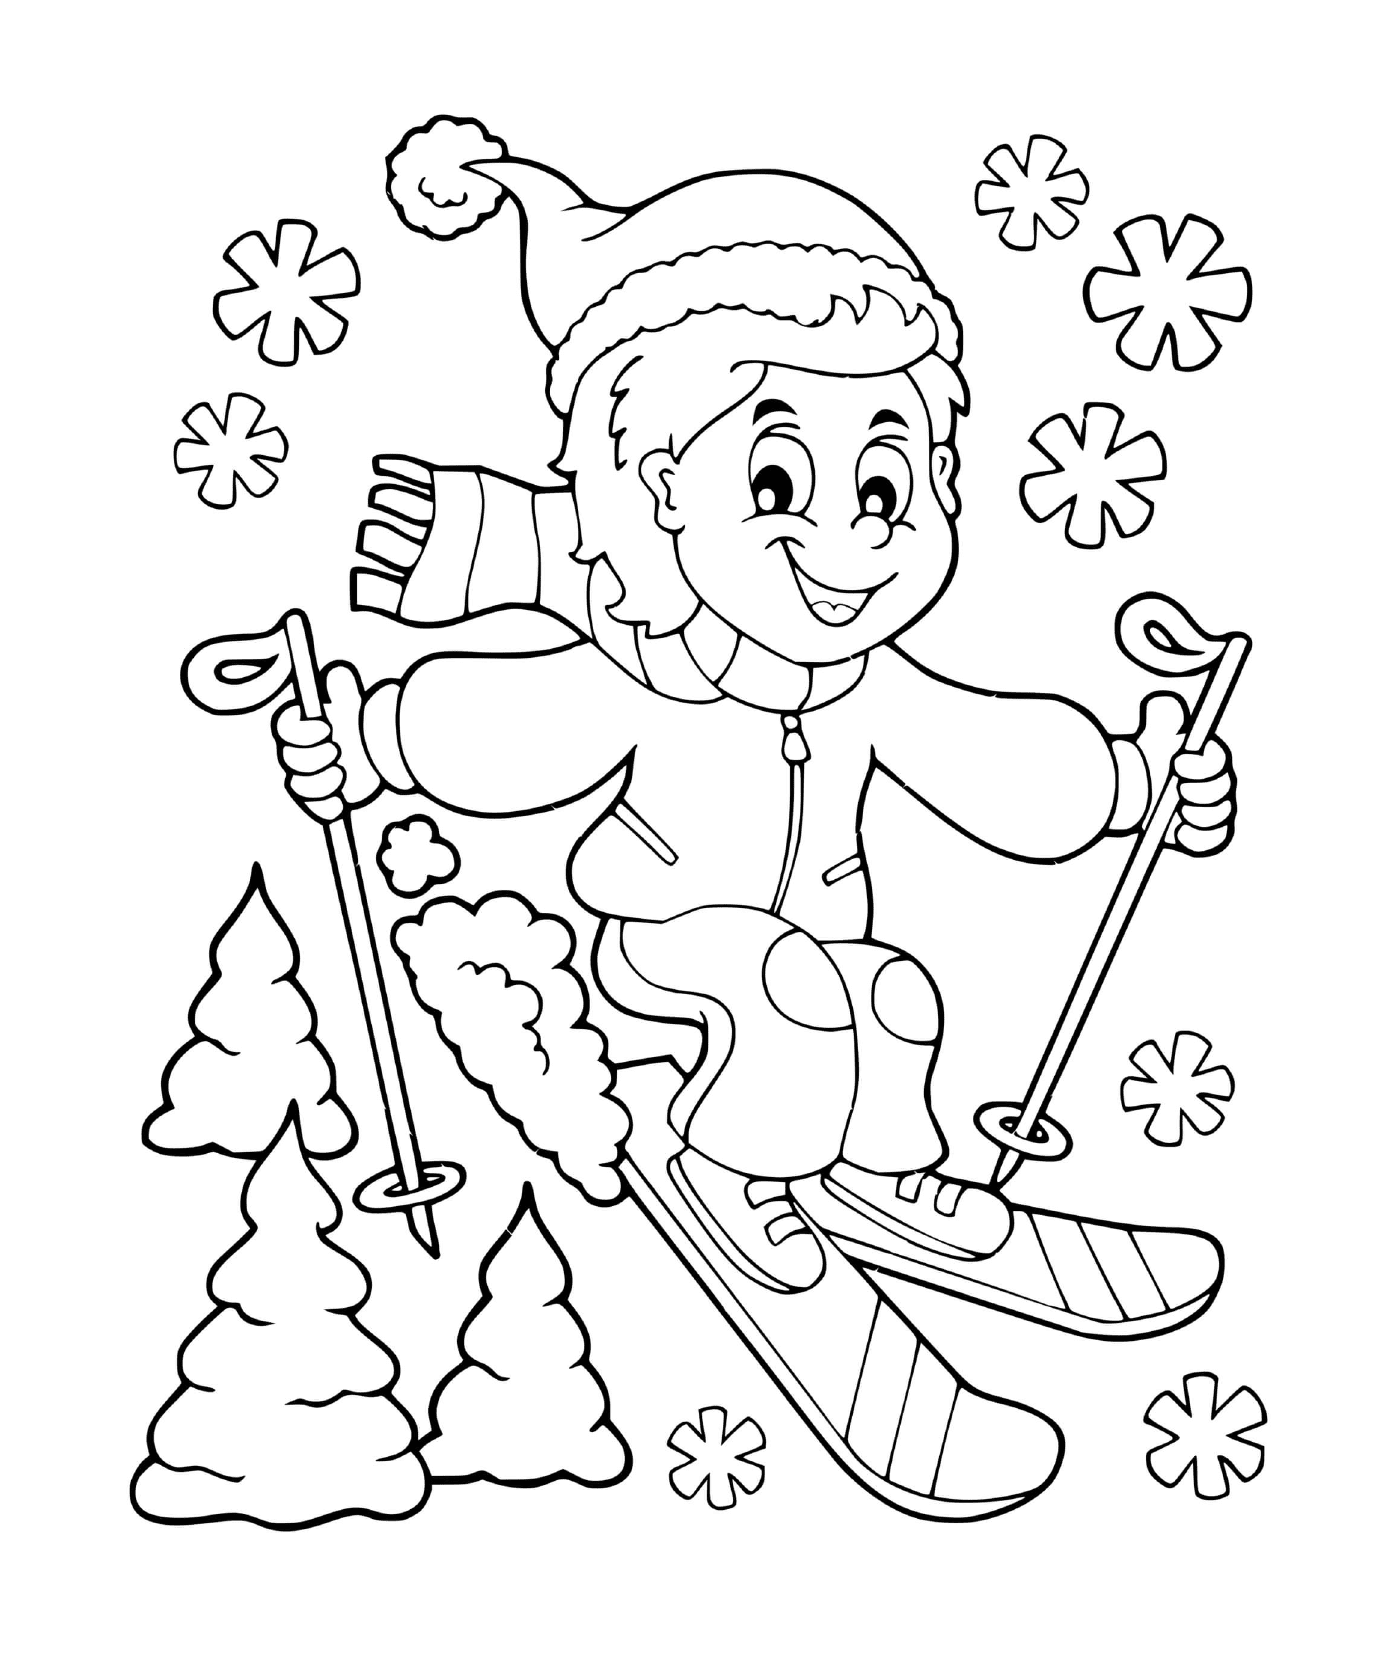 coloriage ski facile maternelle enfant sport hiver